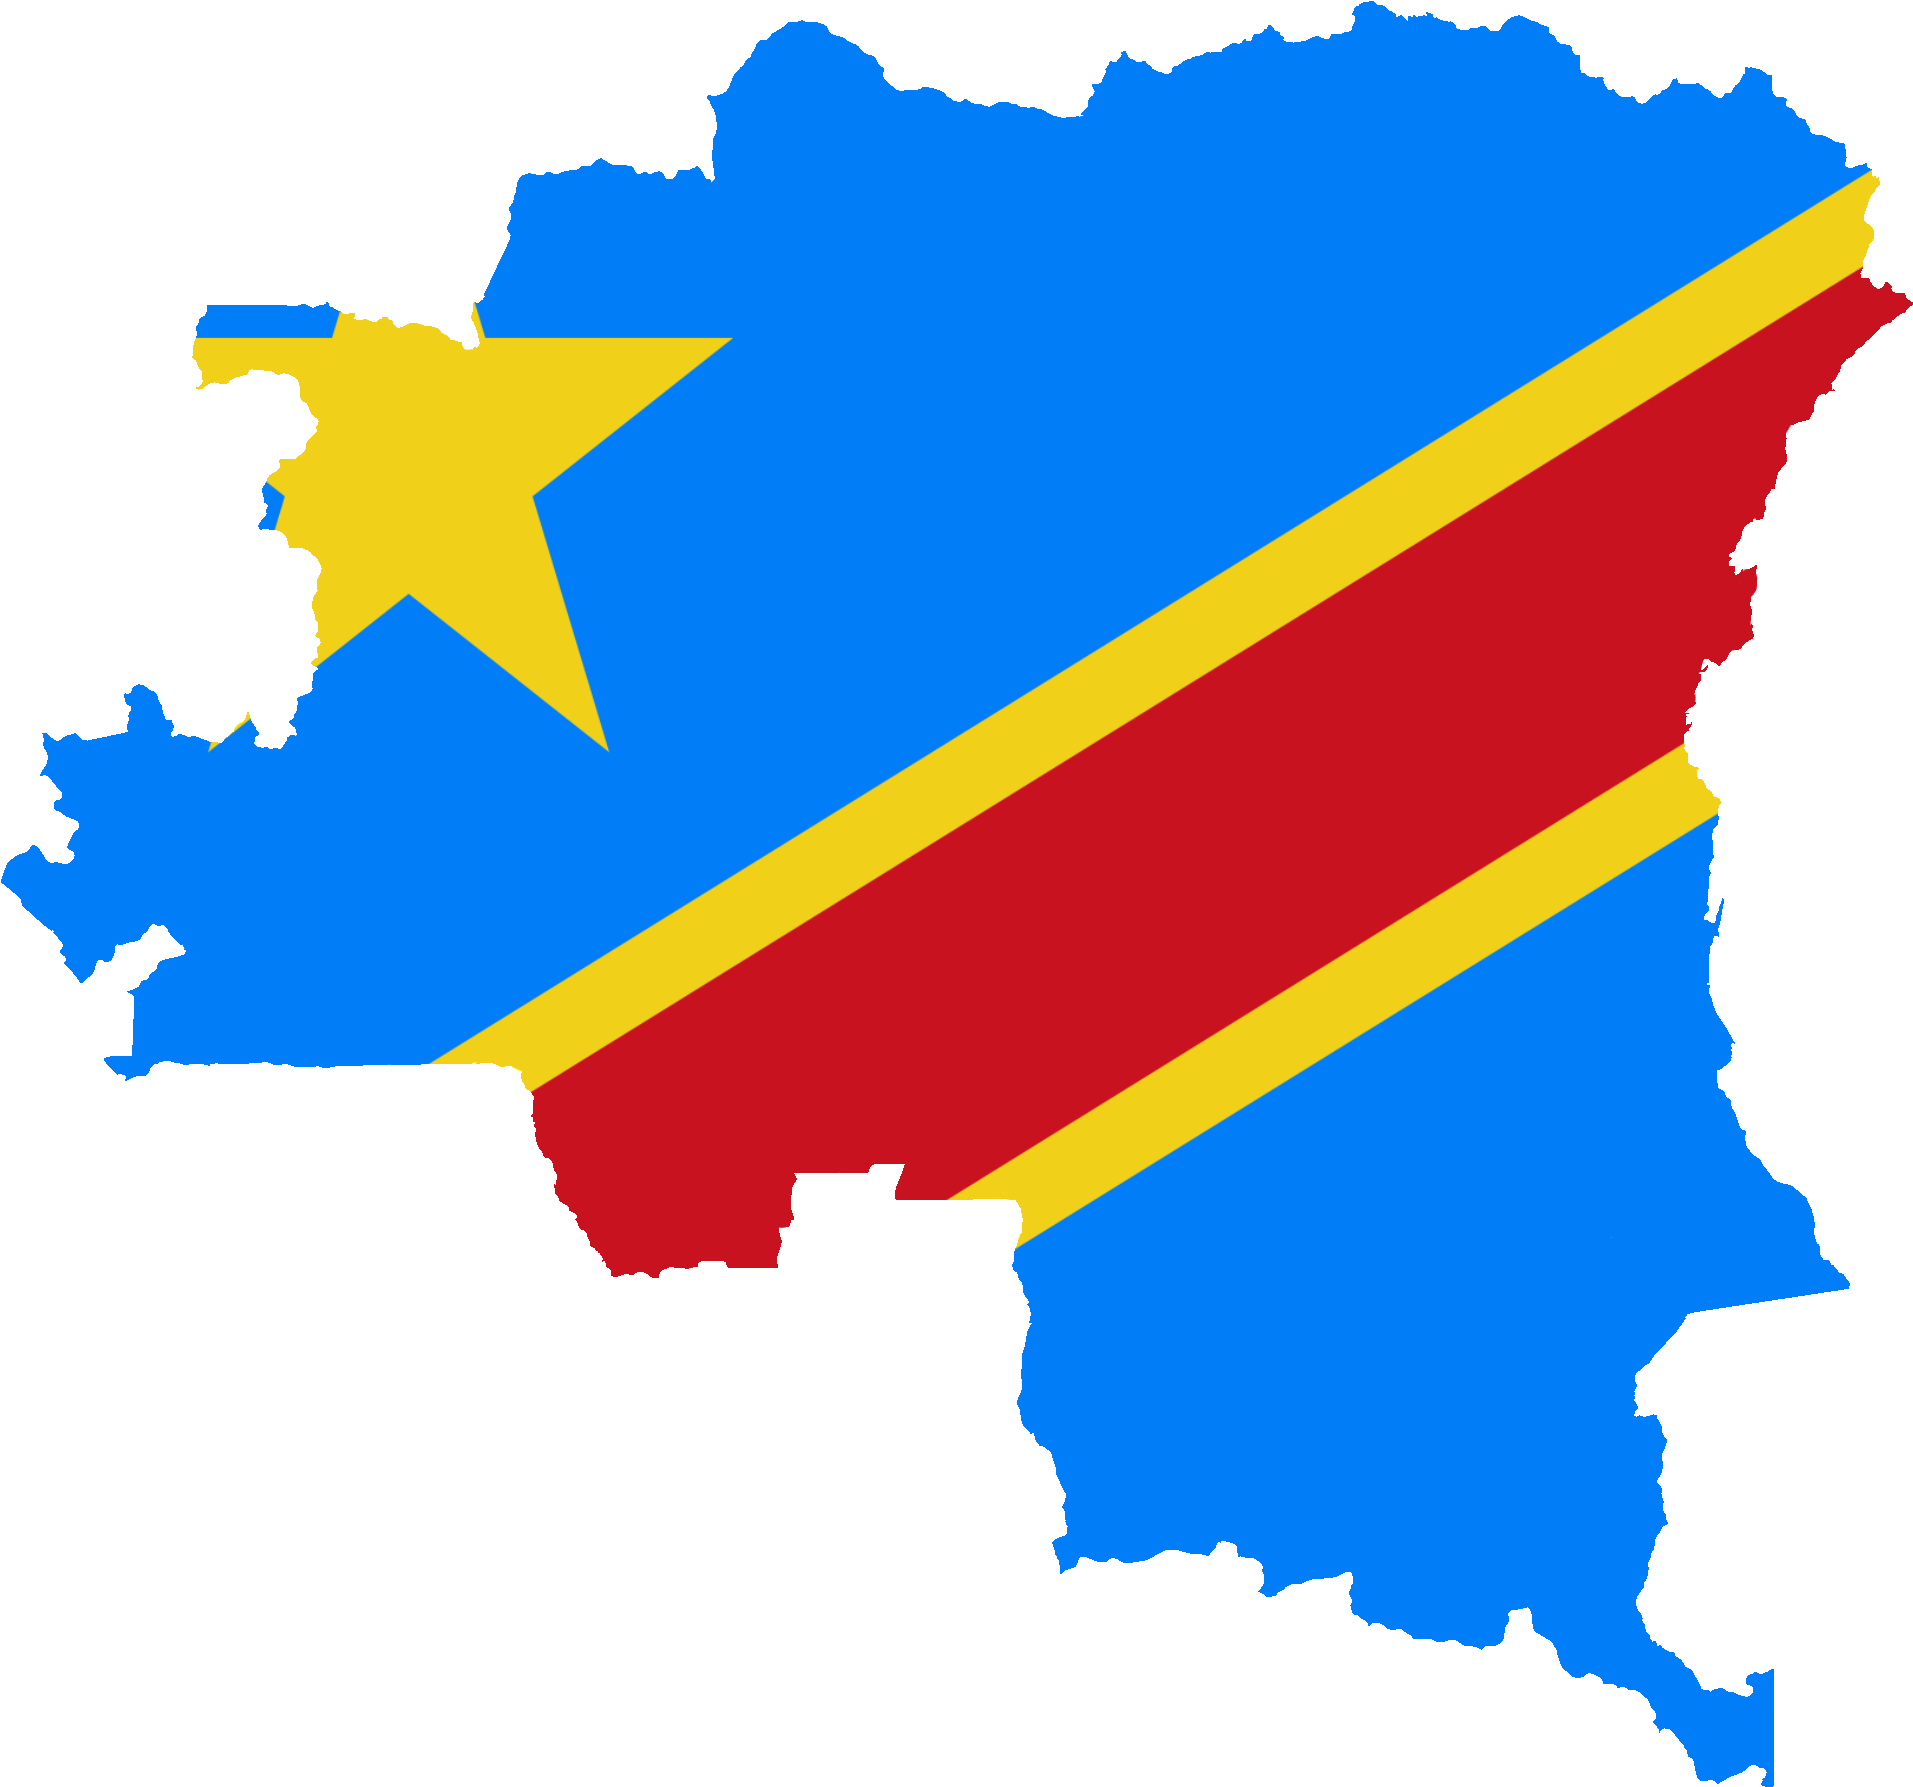 Democratic Republicof Congo Map Outline PNG image